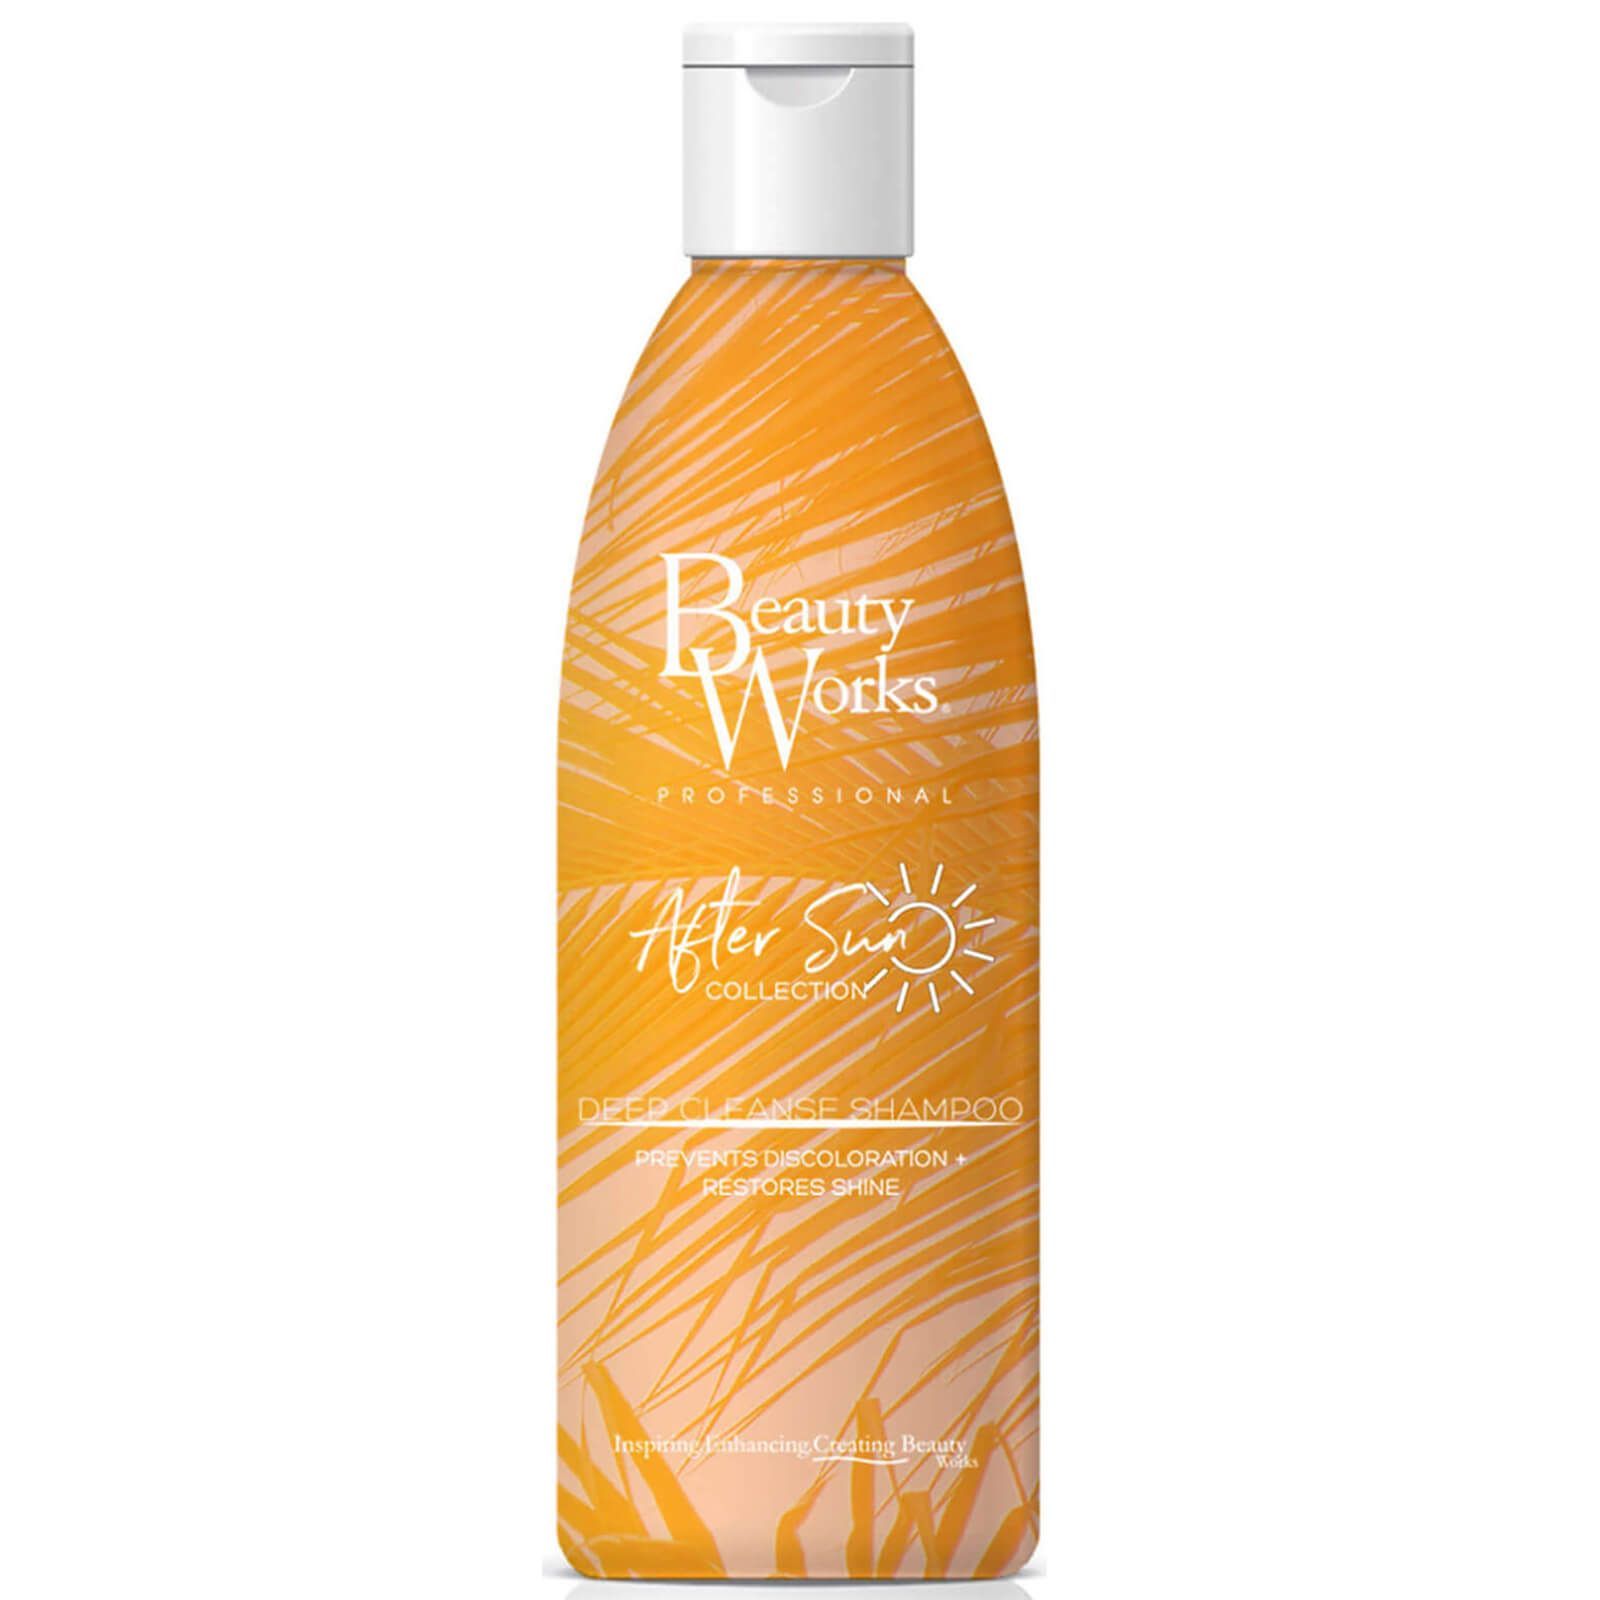 Beauty Works After Sun Deep Cleanse Shampoo - 150ml